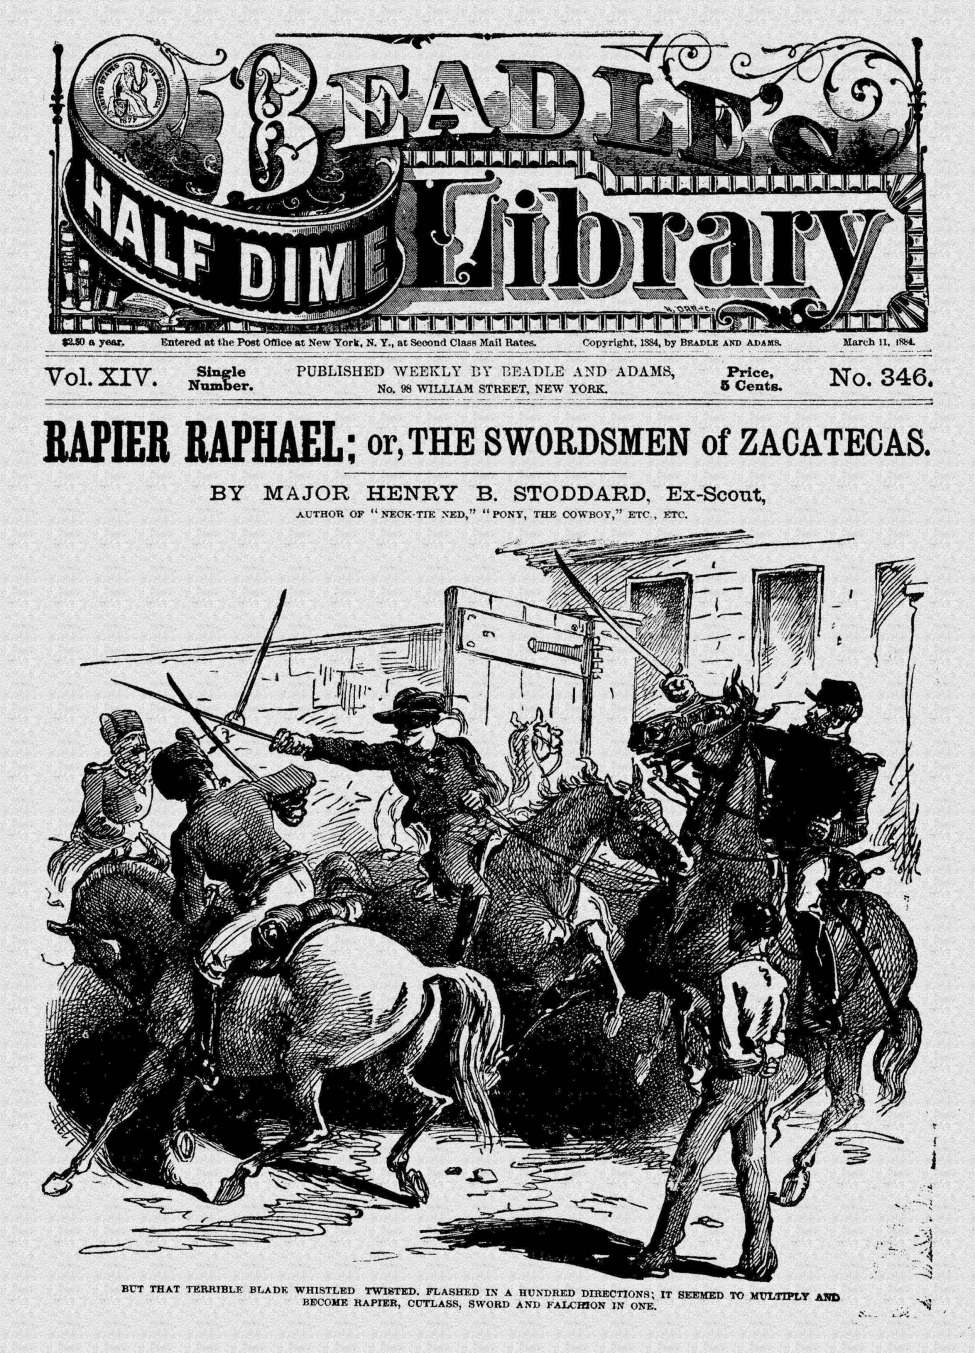 Comic Book Cover For Beadle's Half Dime Library 346 - Rapier Raphael